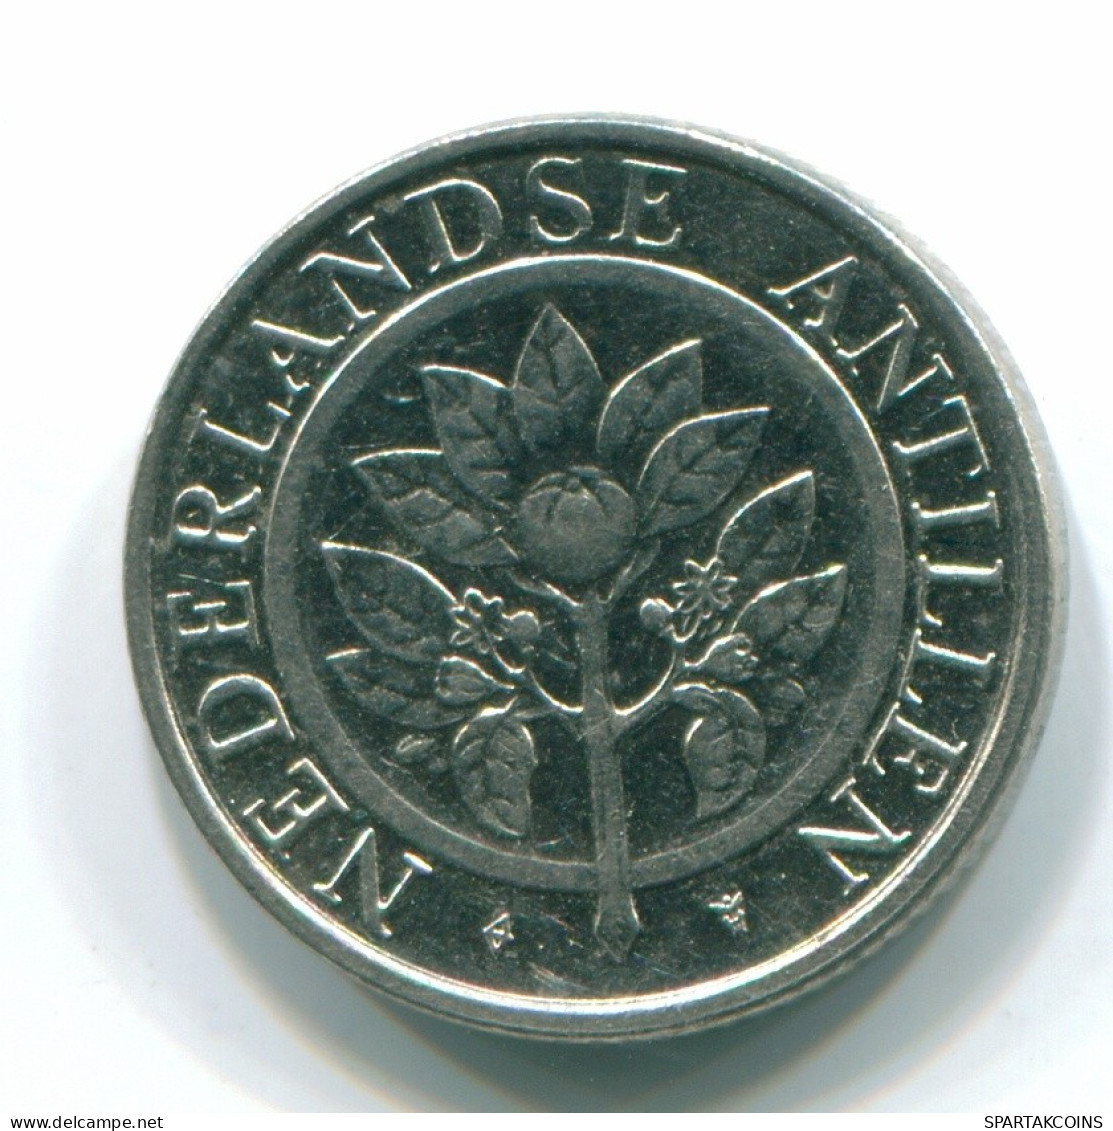 10 CENTS 1991 NETHERLANDS ANTILLES Nickel Colonial Coin #S11332.U.A - Antilles Néerlandaises